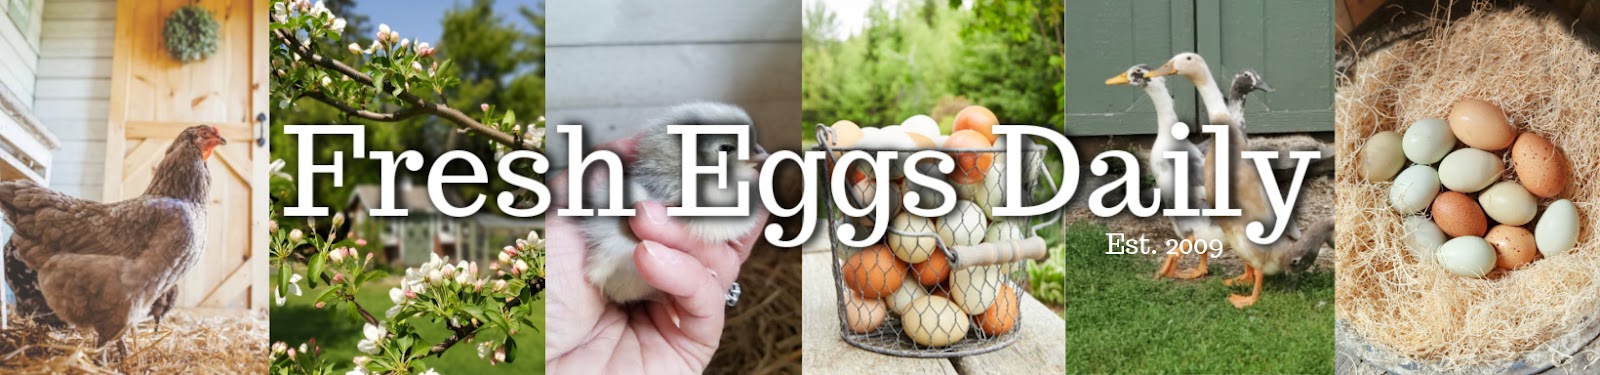 Fresh Eggs Daily® with Lisa Steele